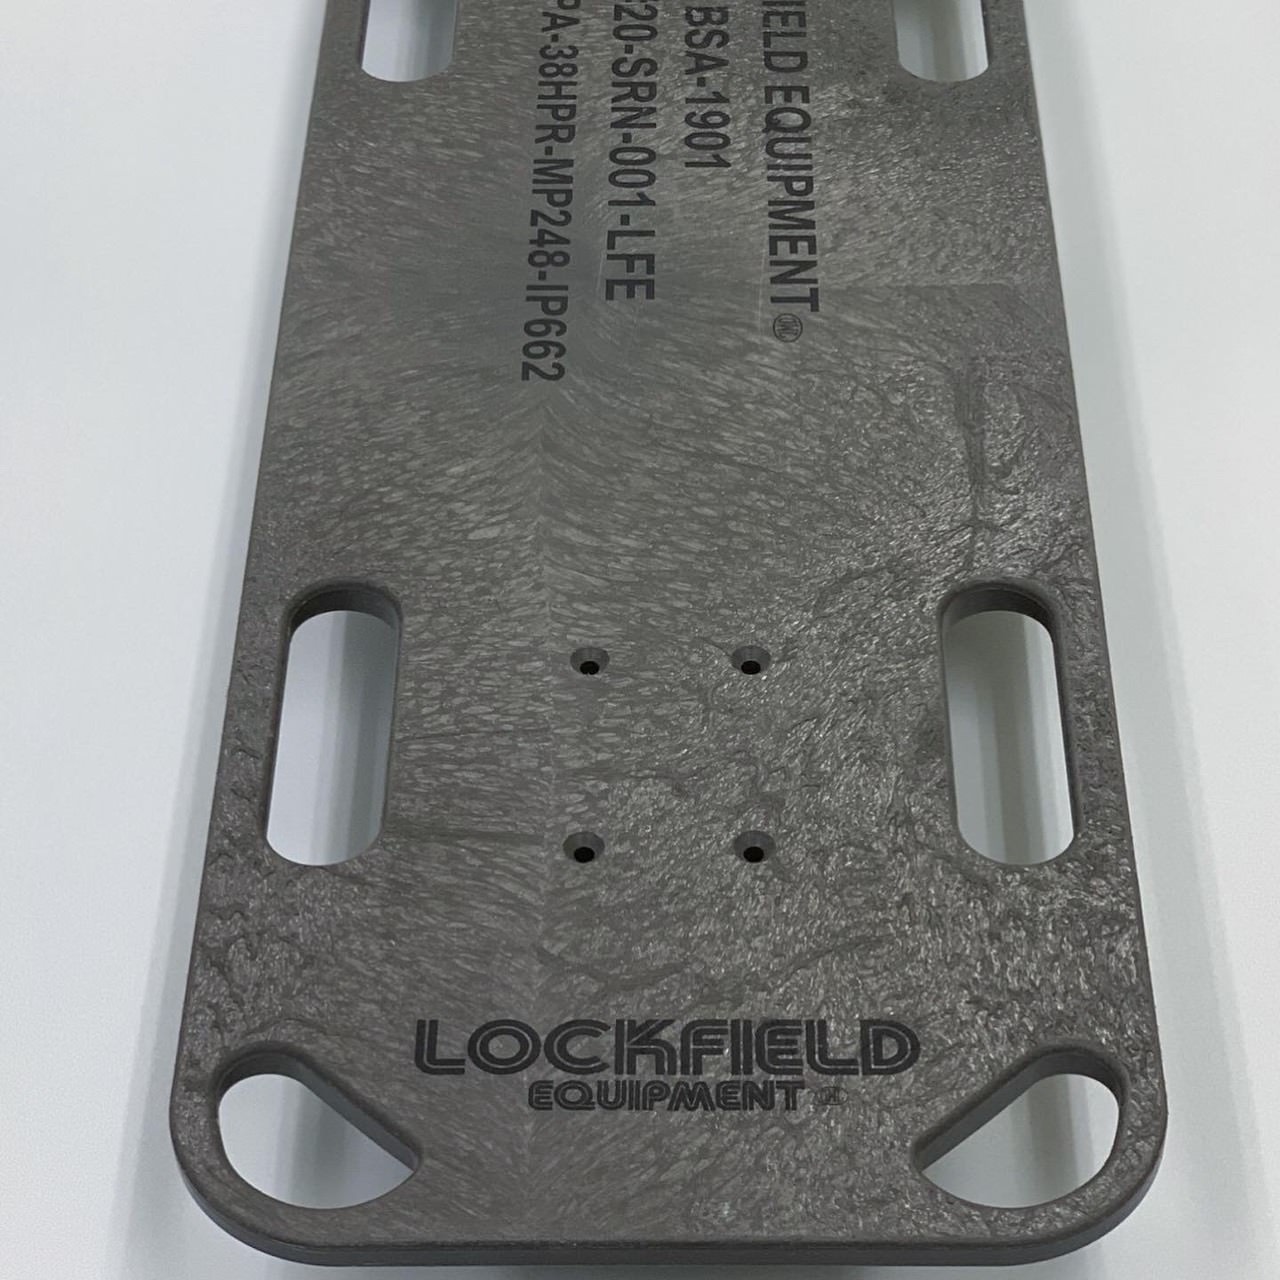 Lockfield Equipment FT40 バリスティクス LFE